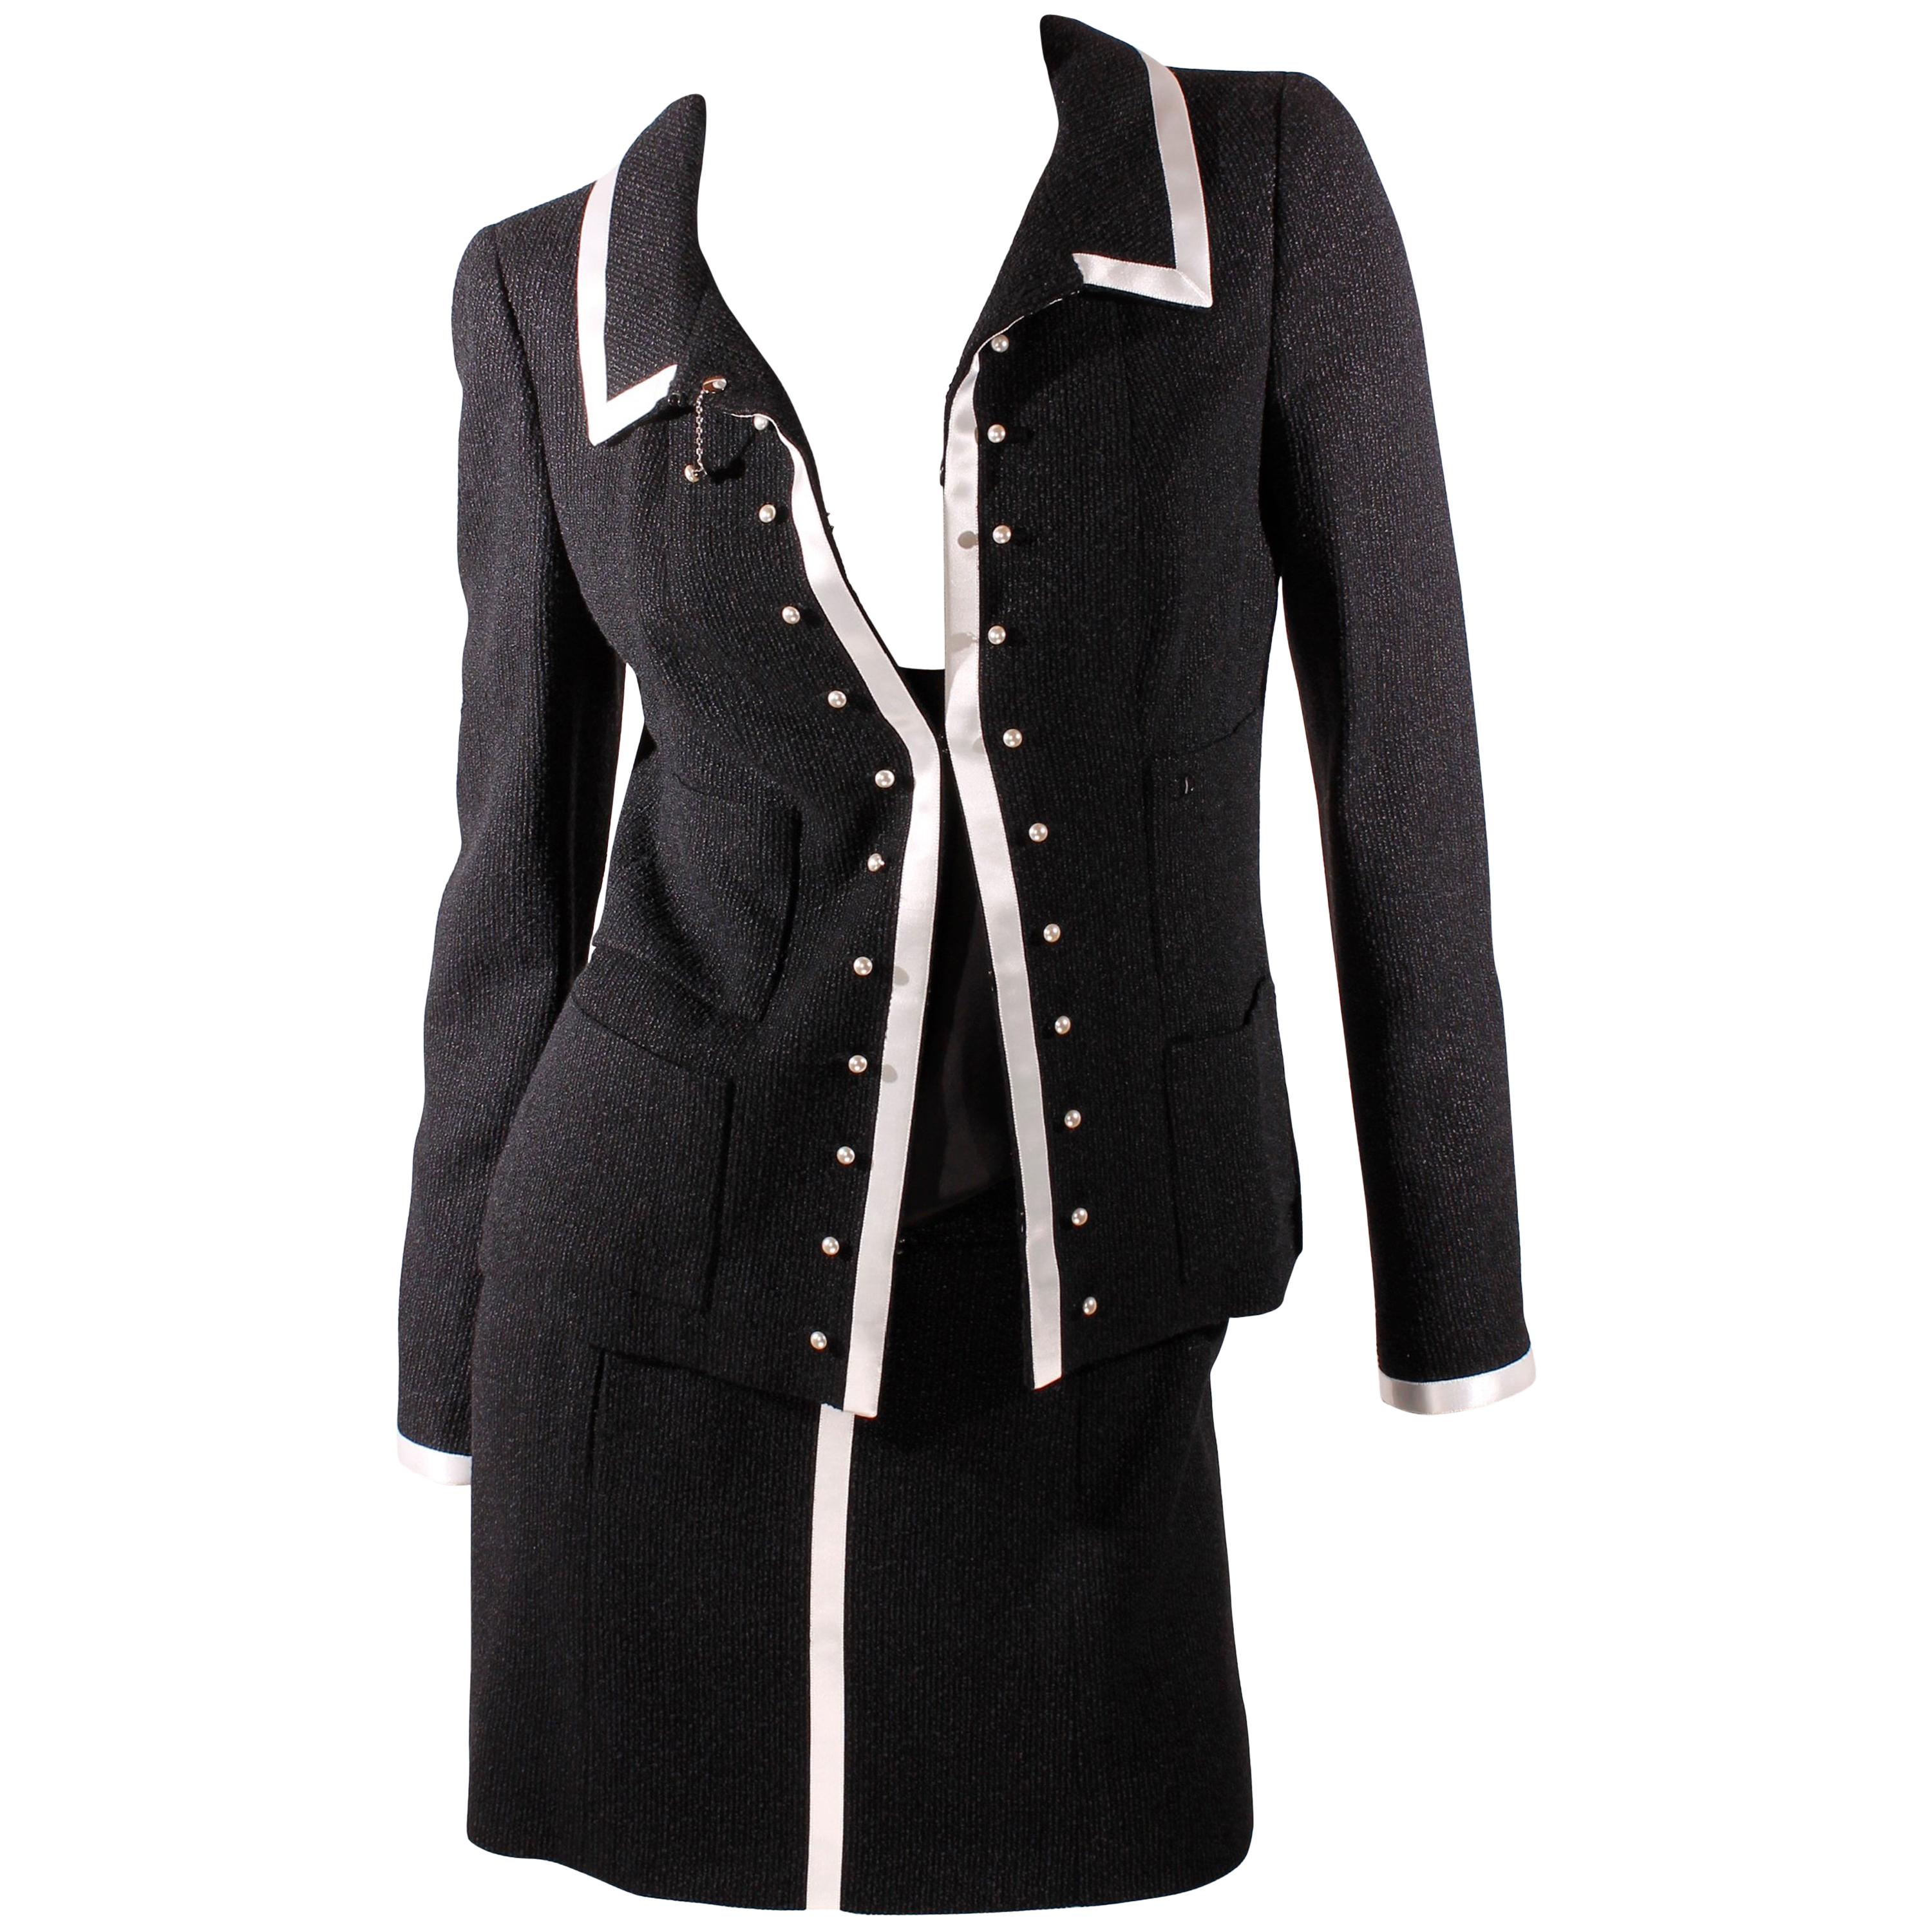 Chanel Jacket and Skirt - Black & White im Angebot